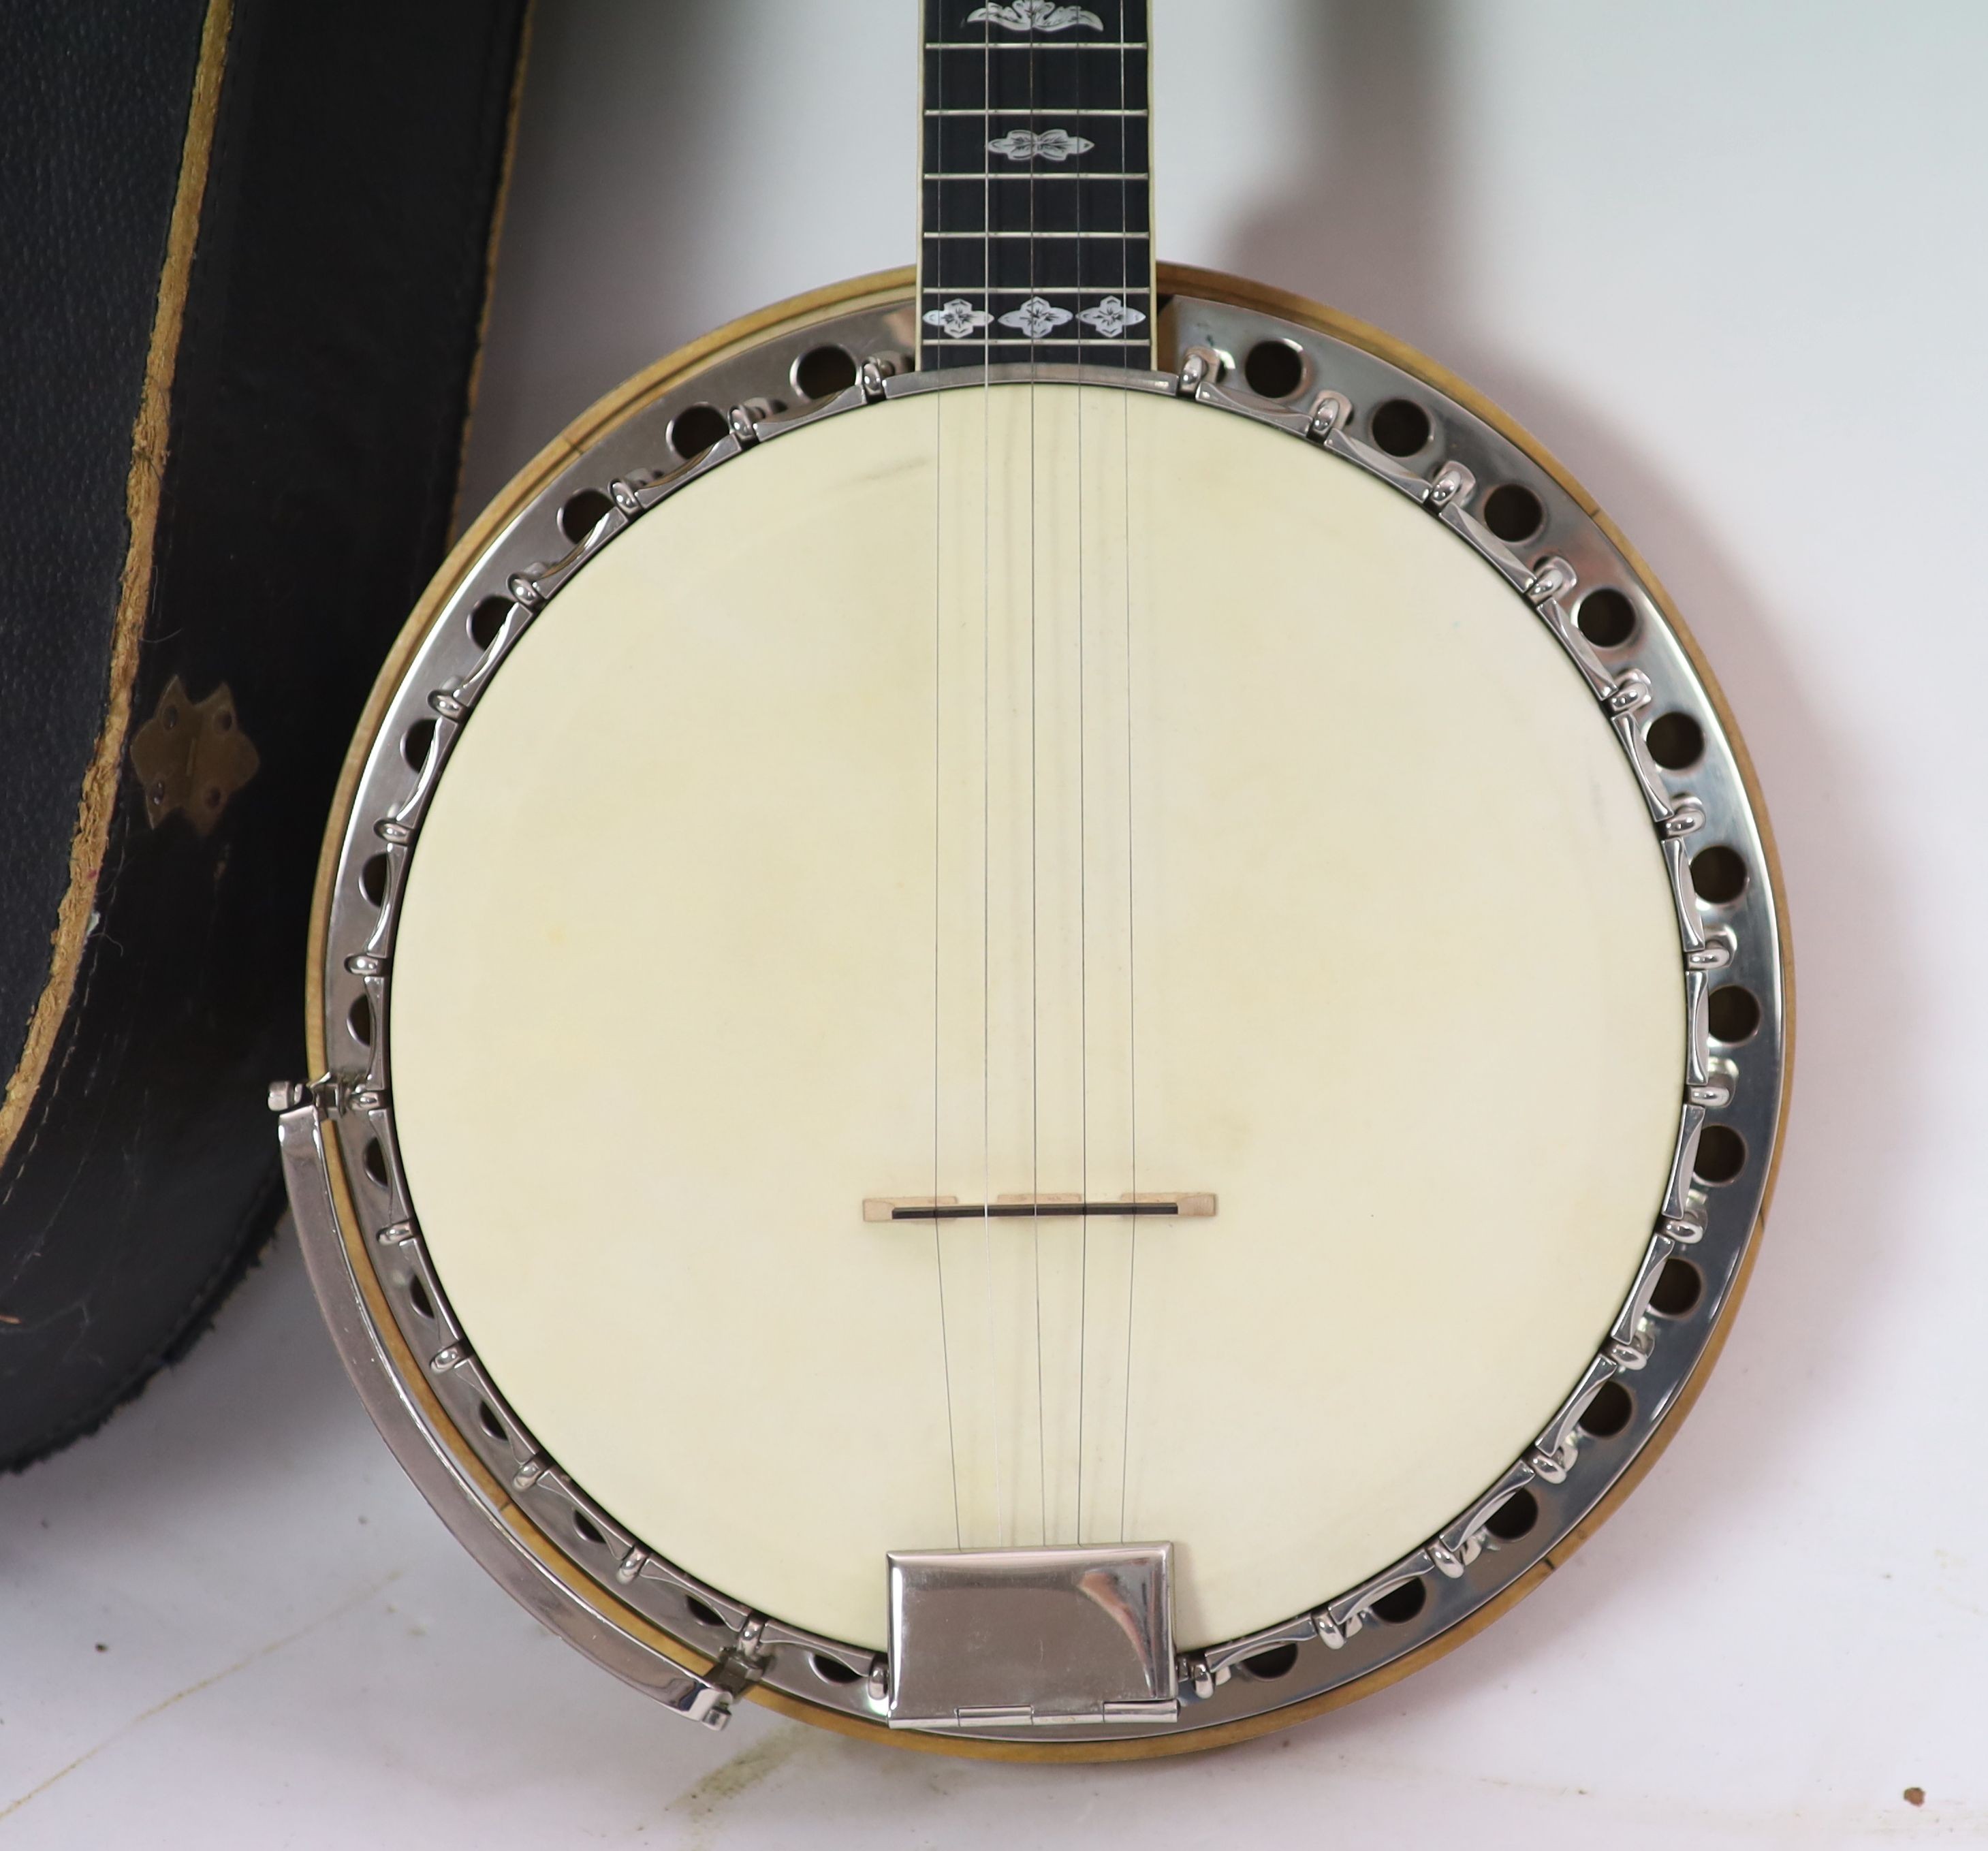 A Paragon banjo length 94cm